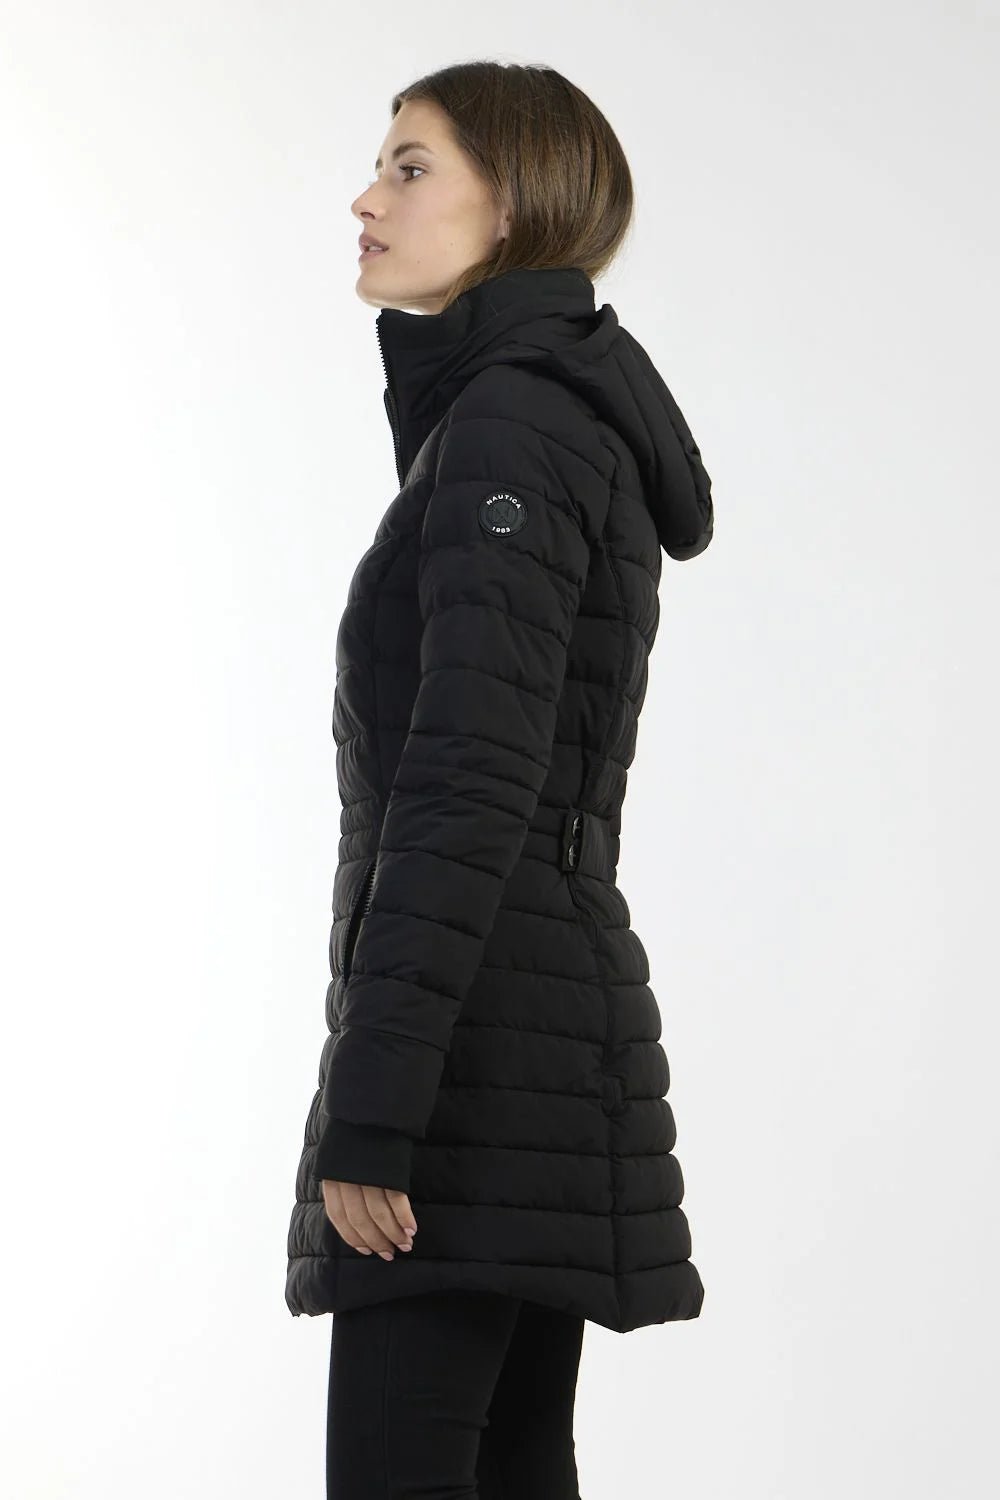 NAUTICA - מעיל ארוך לנשים בצבע שחור - MASHBIR//365